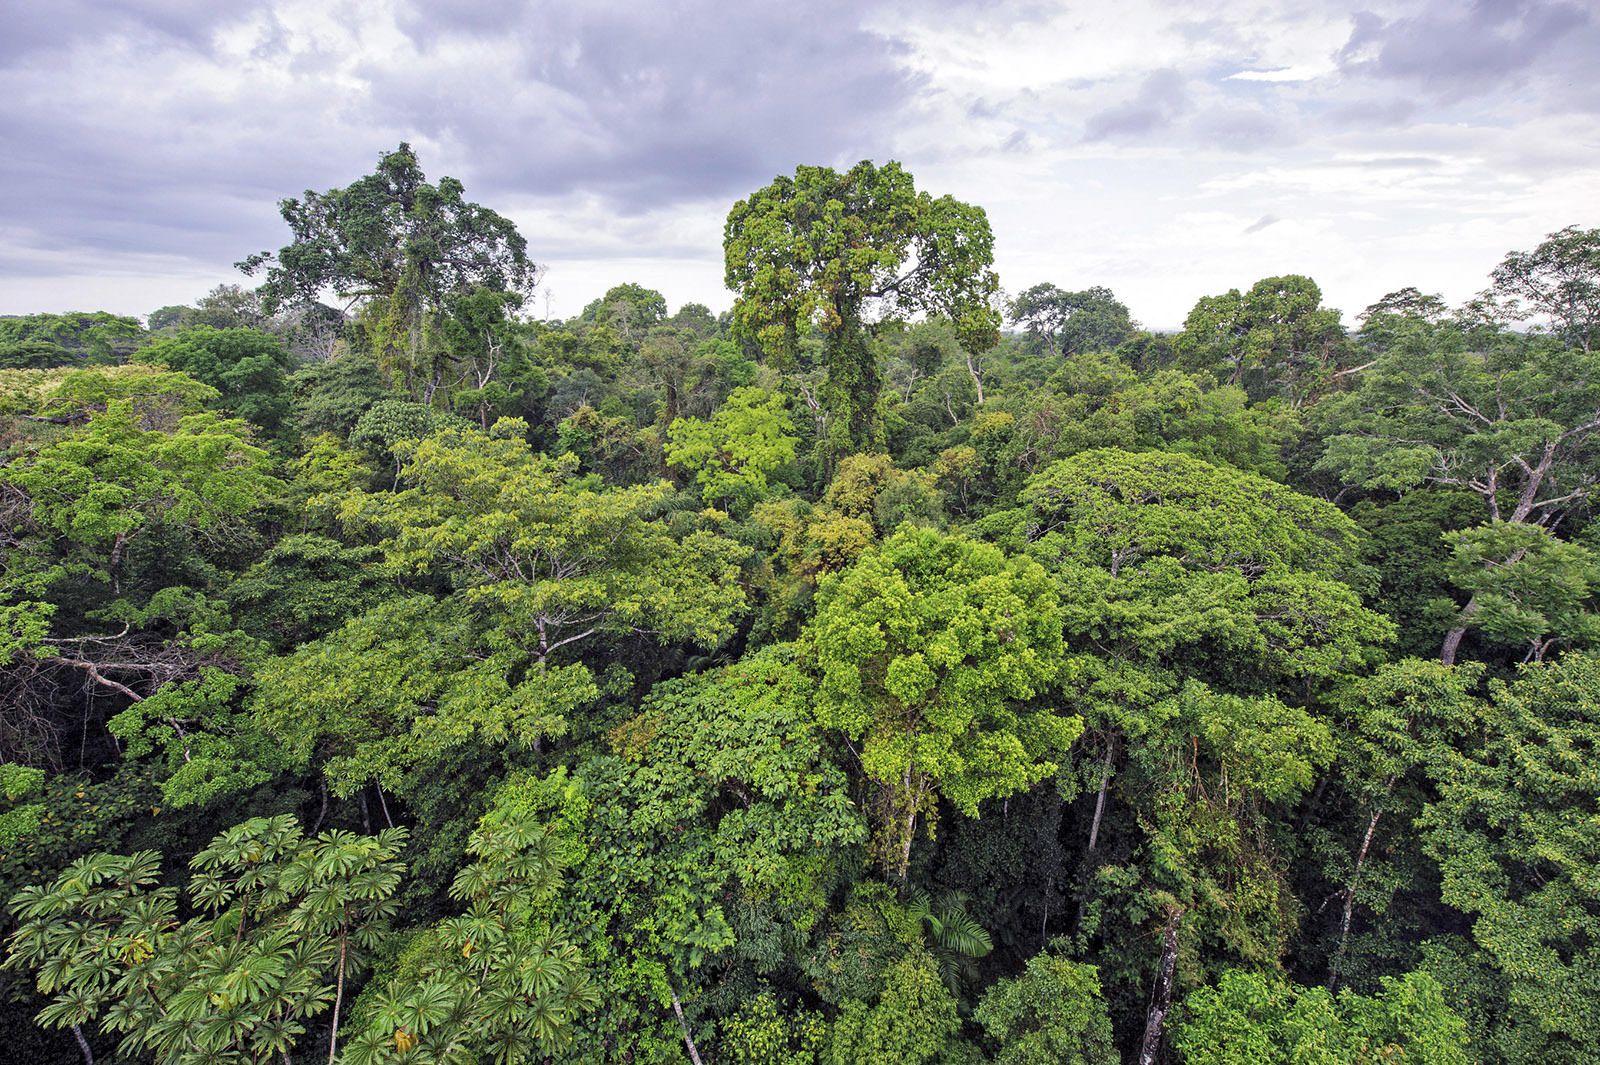 Explore Photos of Tropical Rainforest Plants: Types & Adaptations